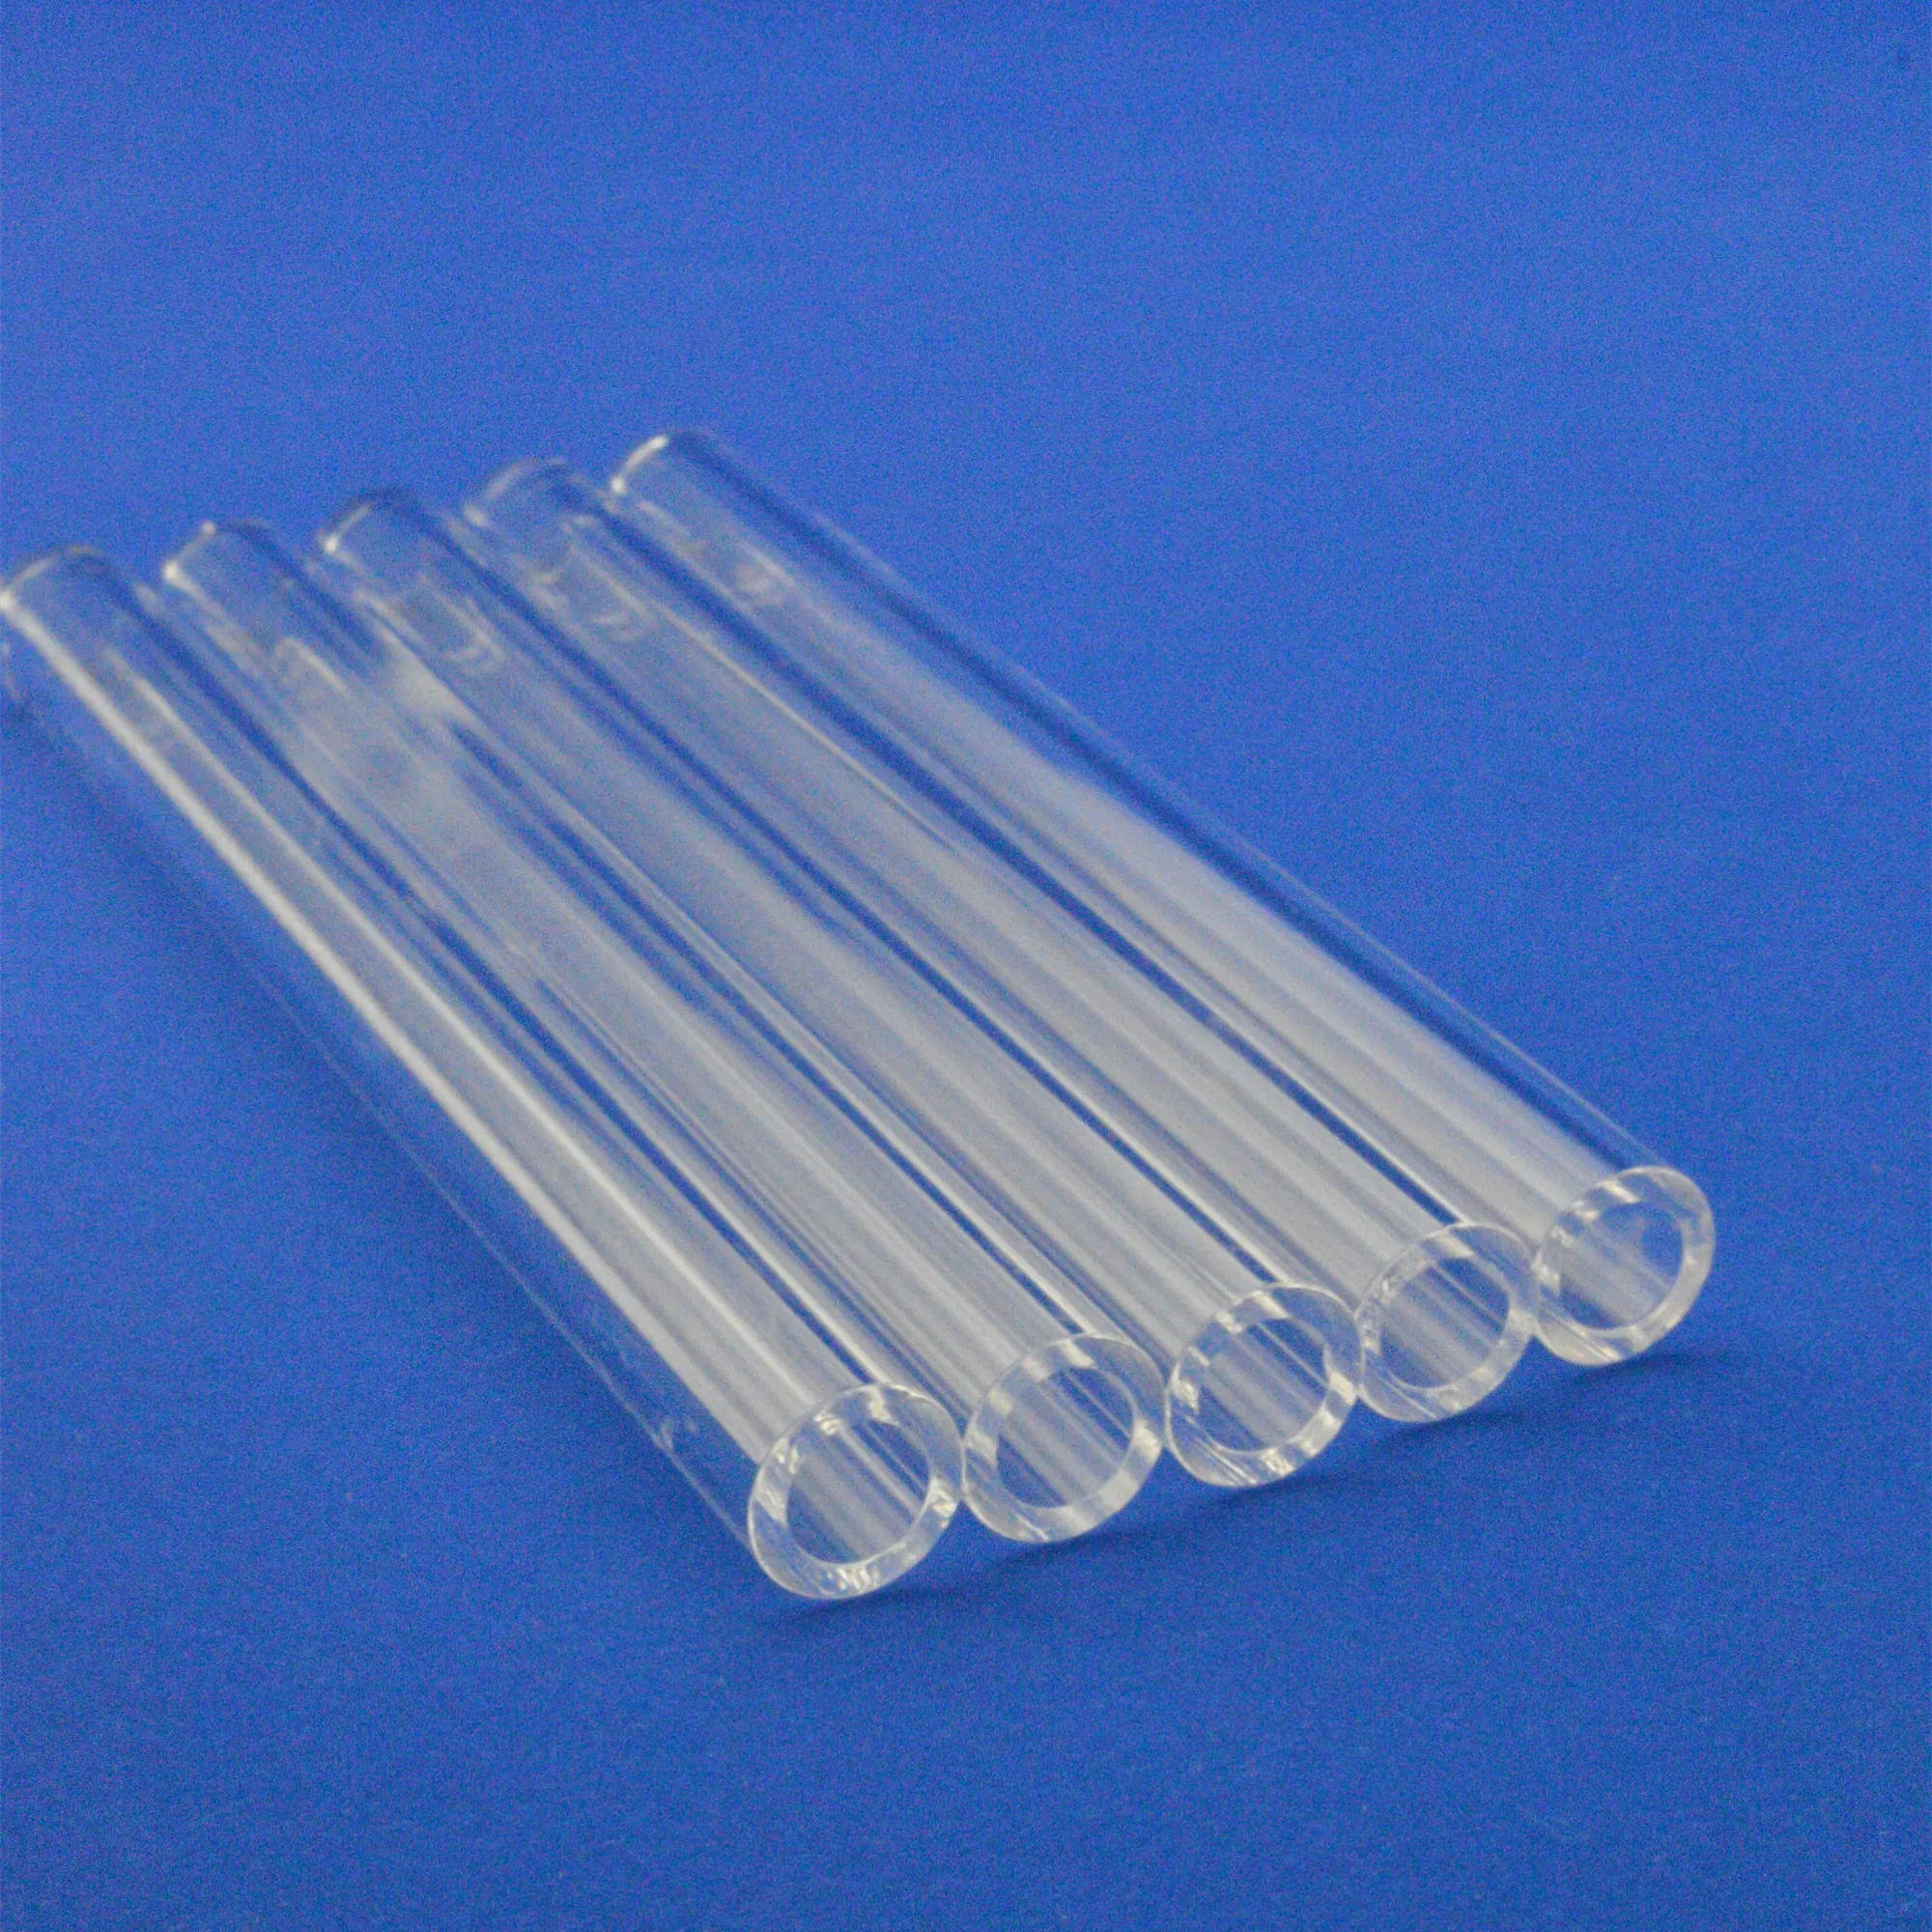 
HUAFENG high quality flat bottom clear quartz glass test tube 